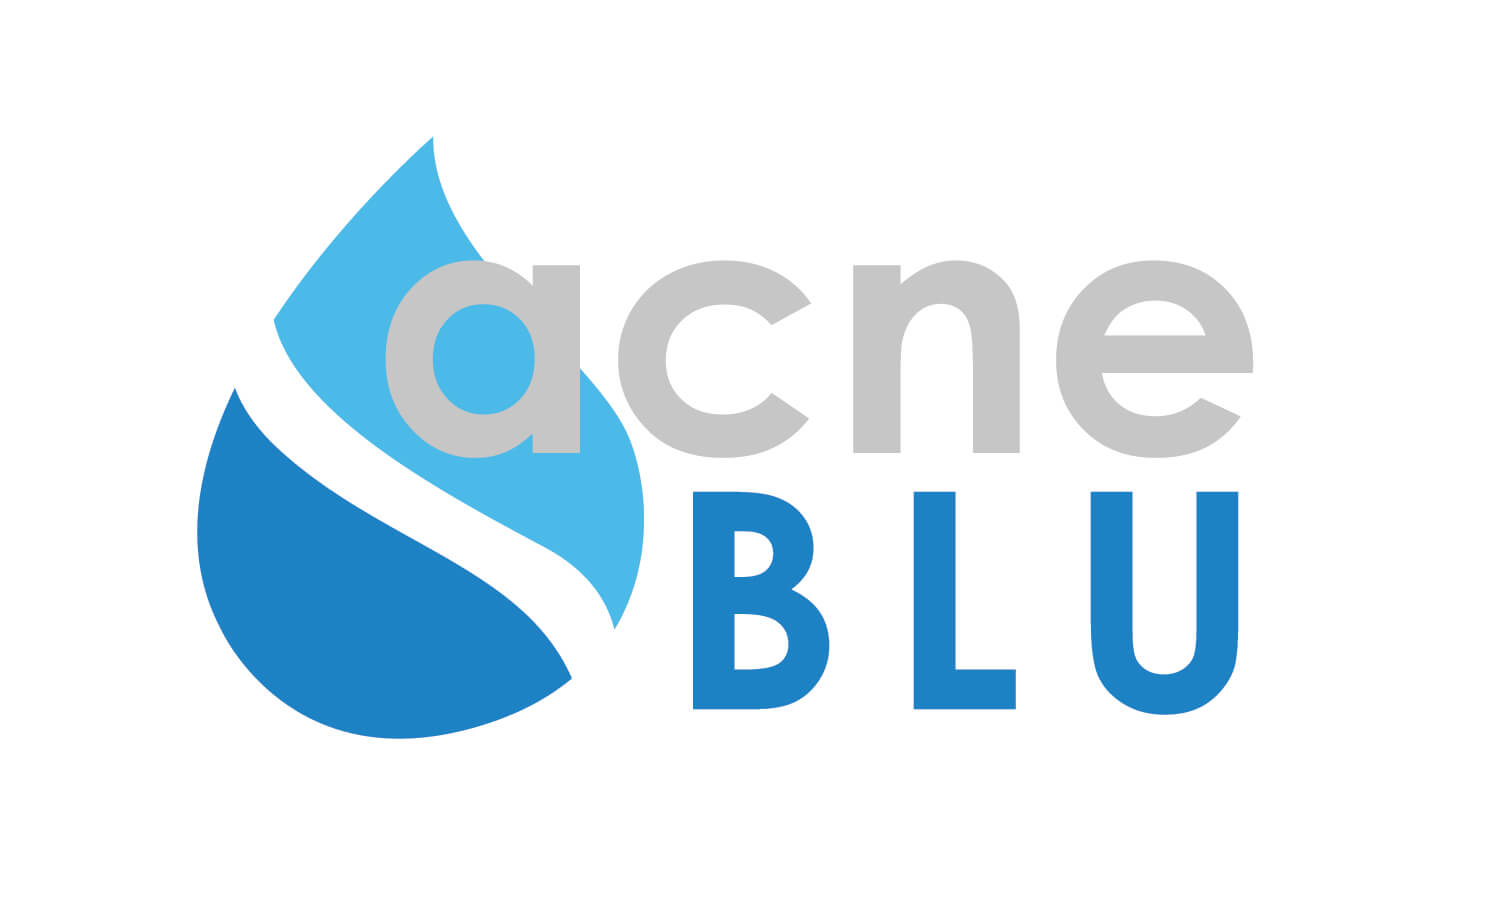 Acne Blu logo with a white background